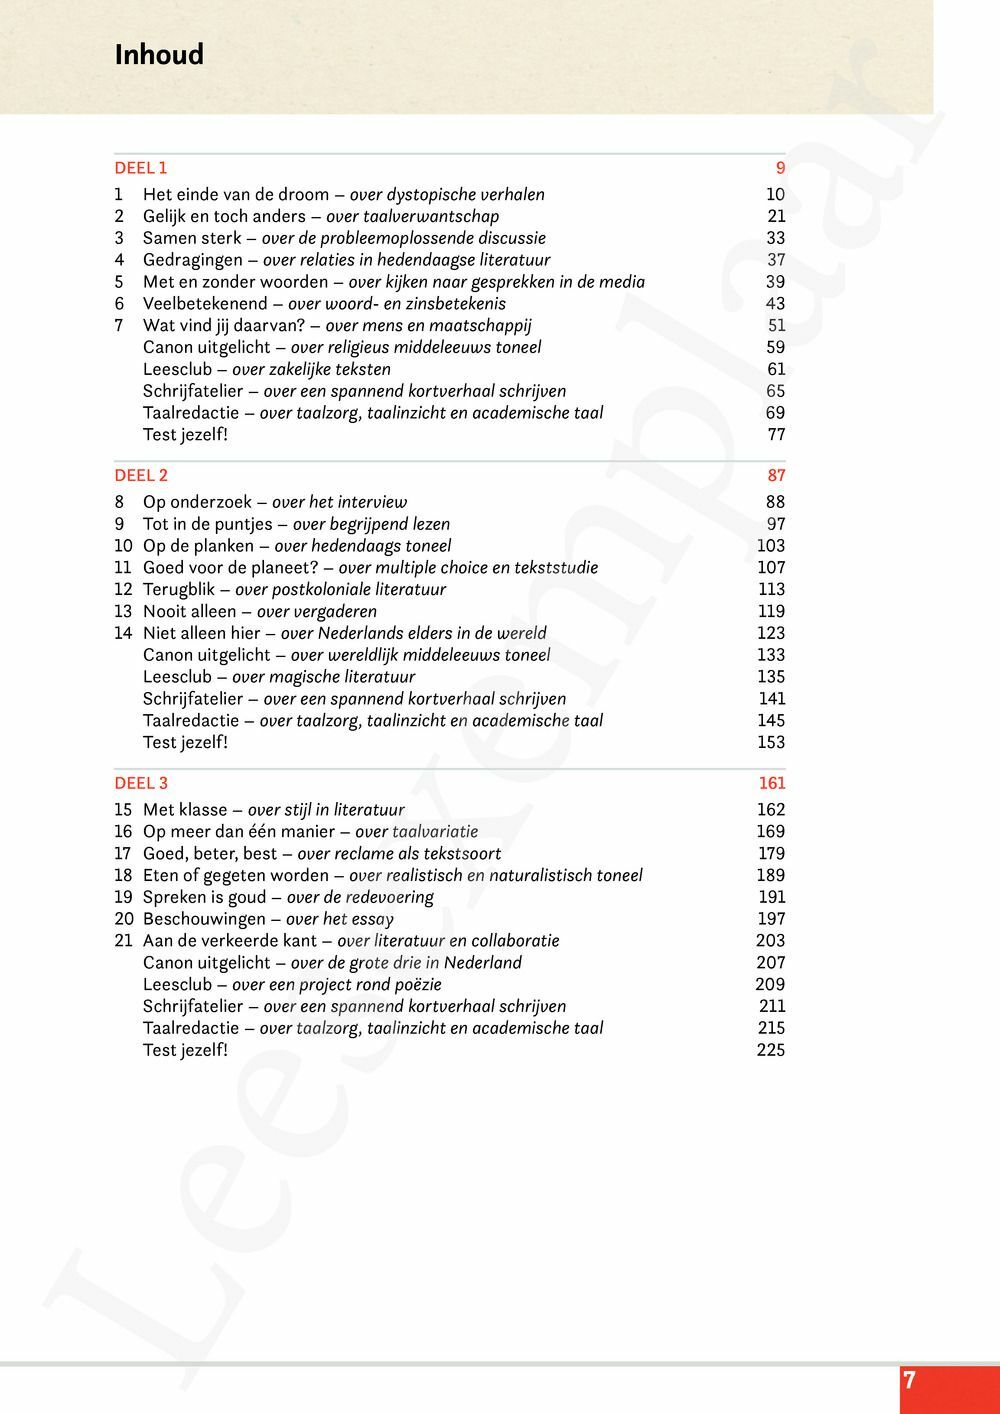 Preview: Campus Nederlands 6 Werkboek (incl. Pelckmans Portaal)